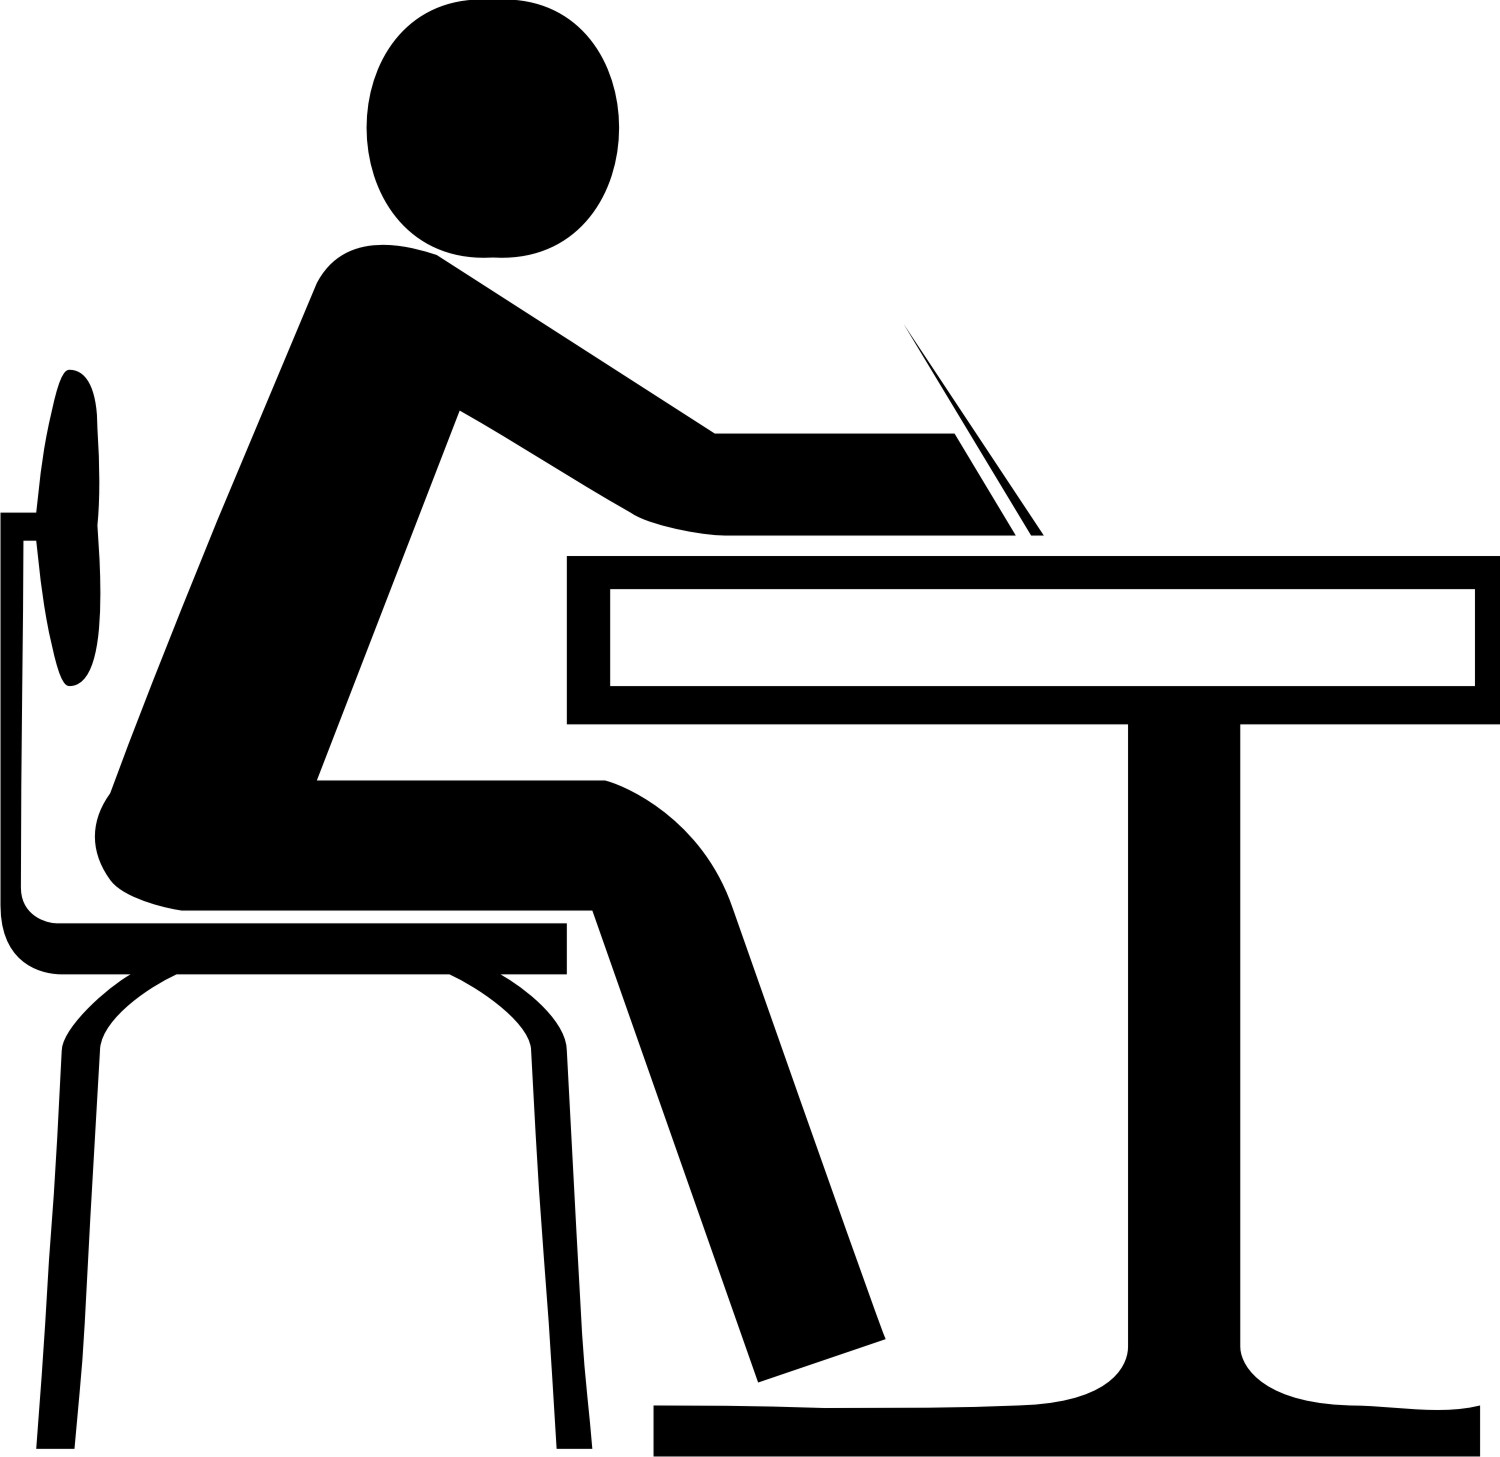 Student sitting in desk .